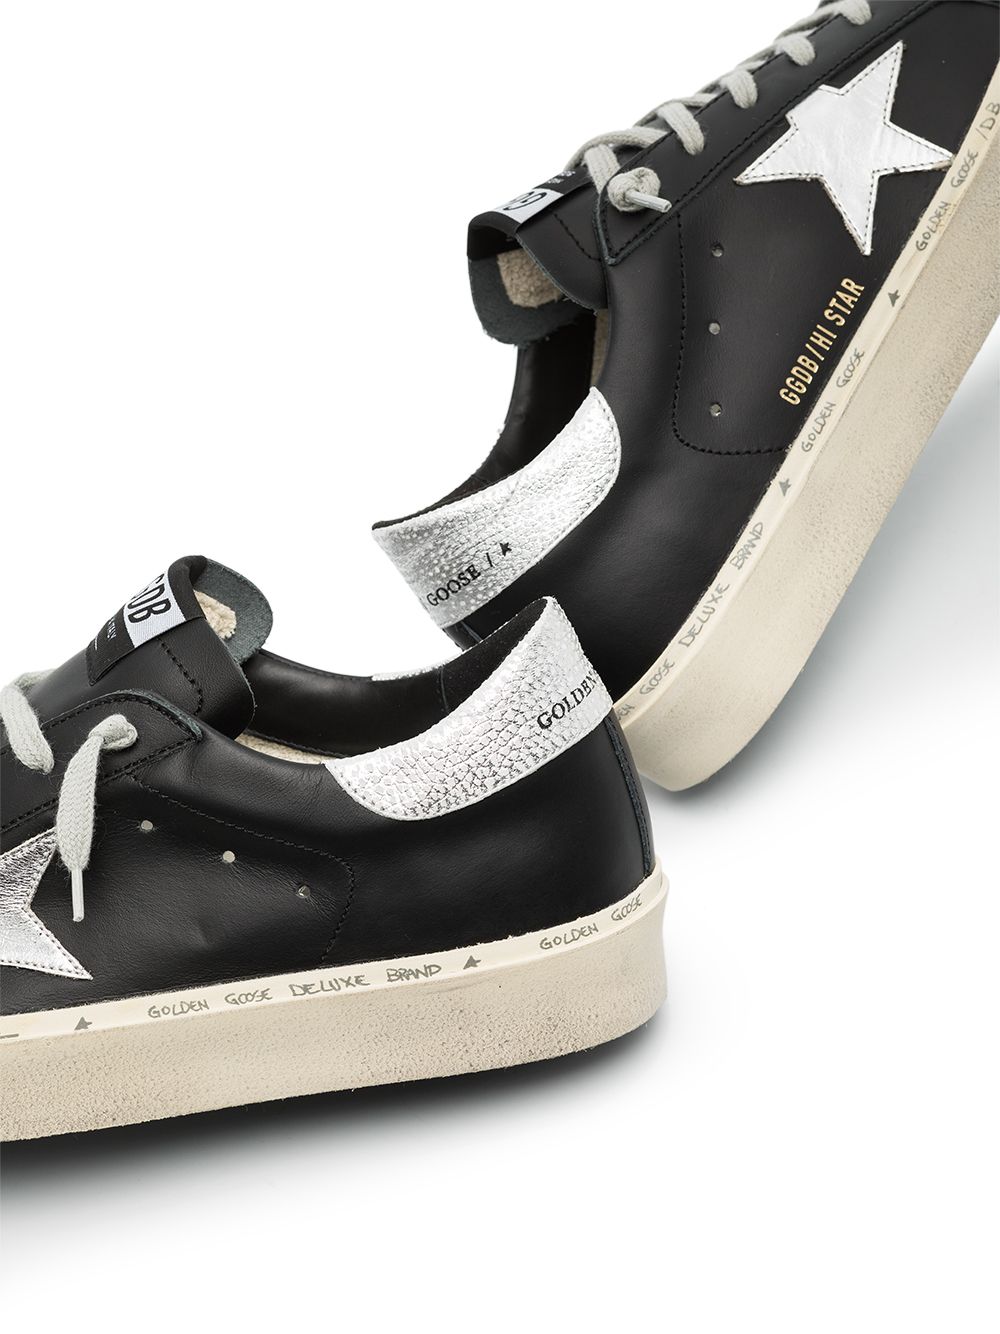 GOLDEN GOOSE Black Leather Hi Star Low-Top Flatform Sneakers for Women